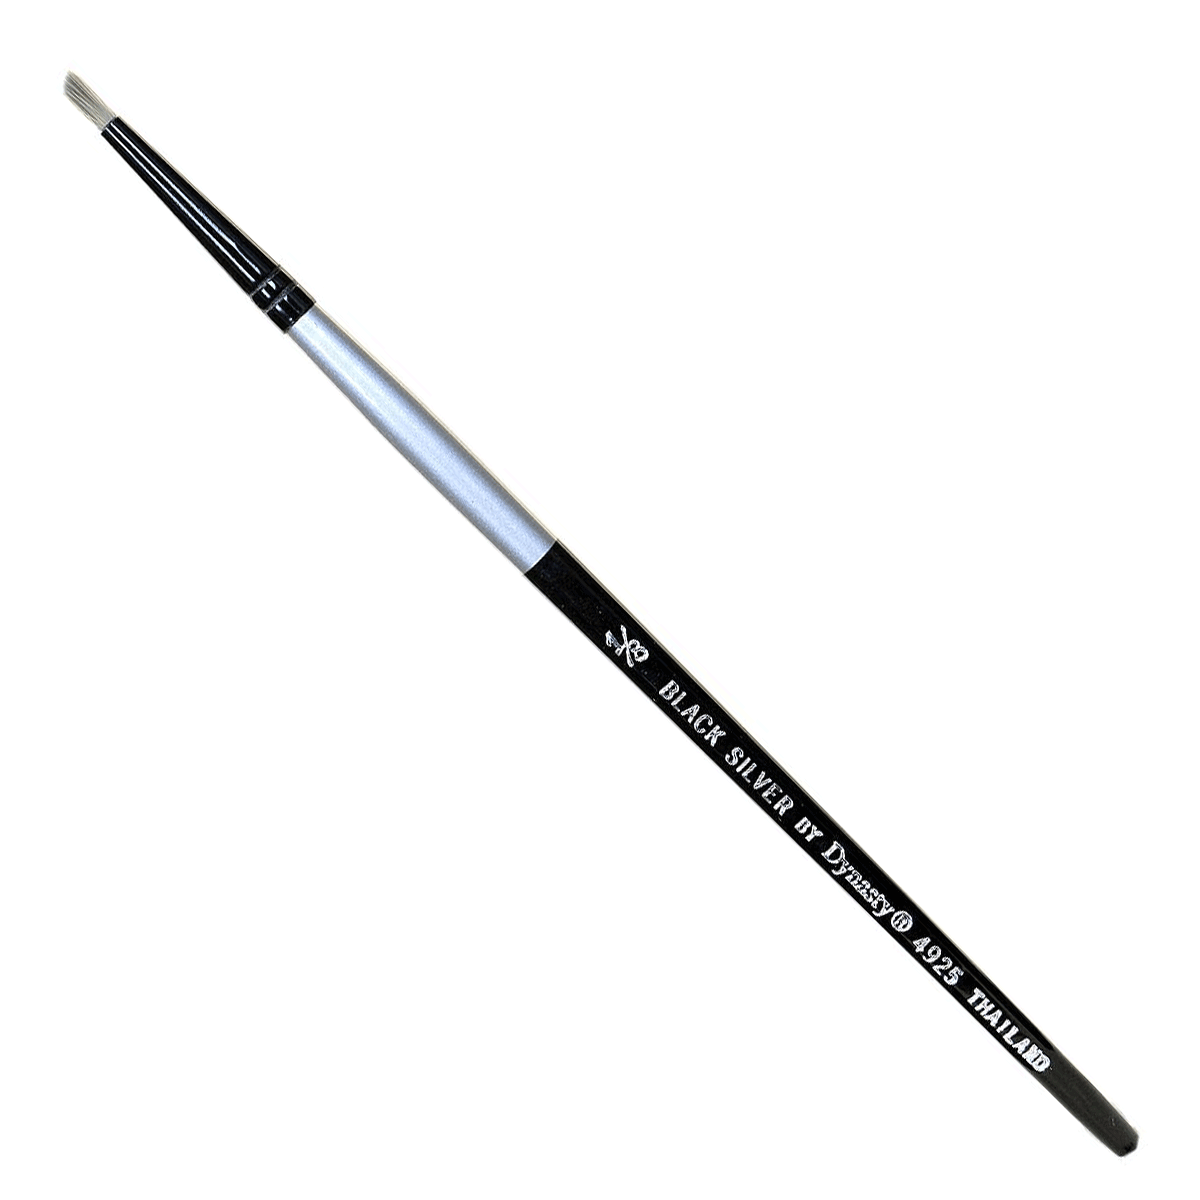 Dynasty Black Silver SH Brush - Deerfoot 1/8 inch